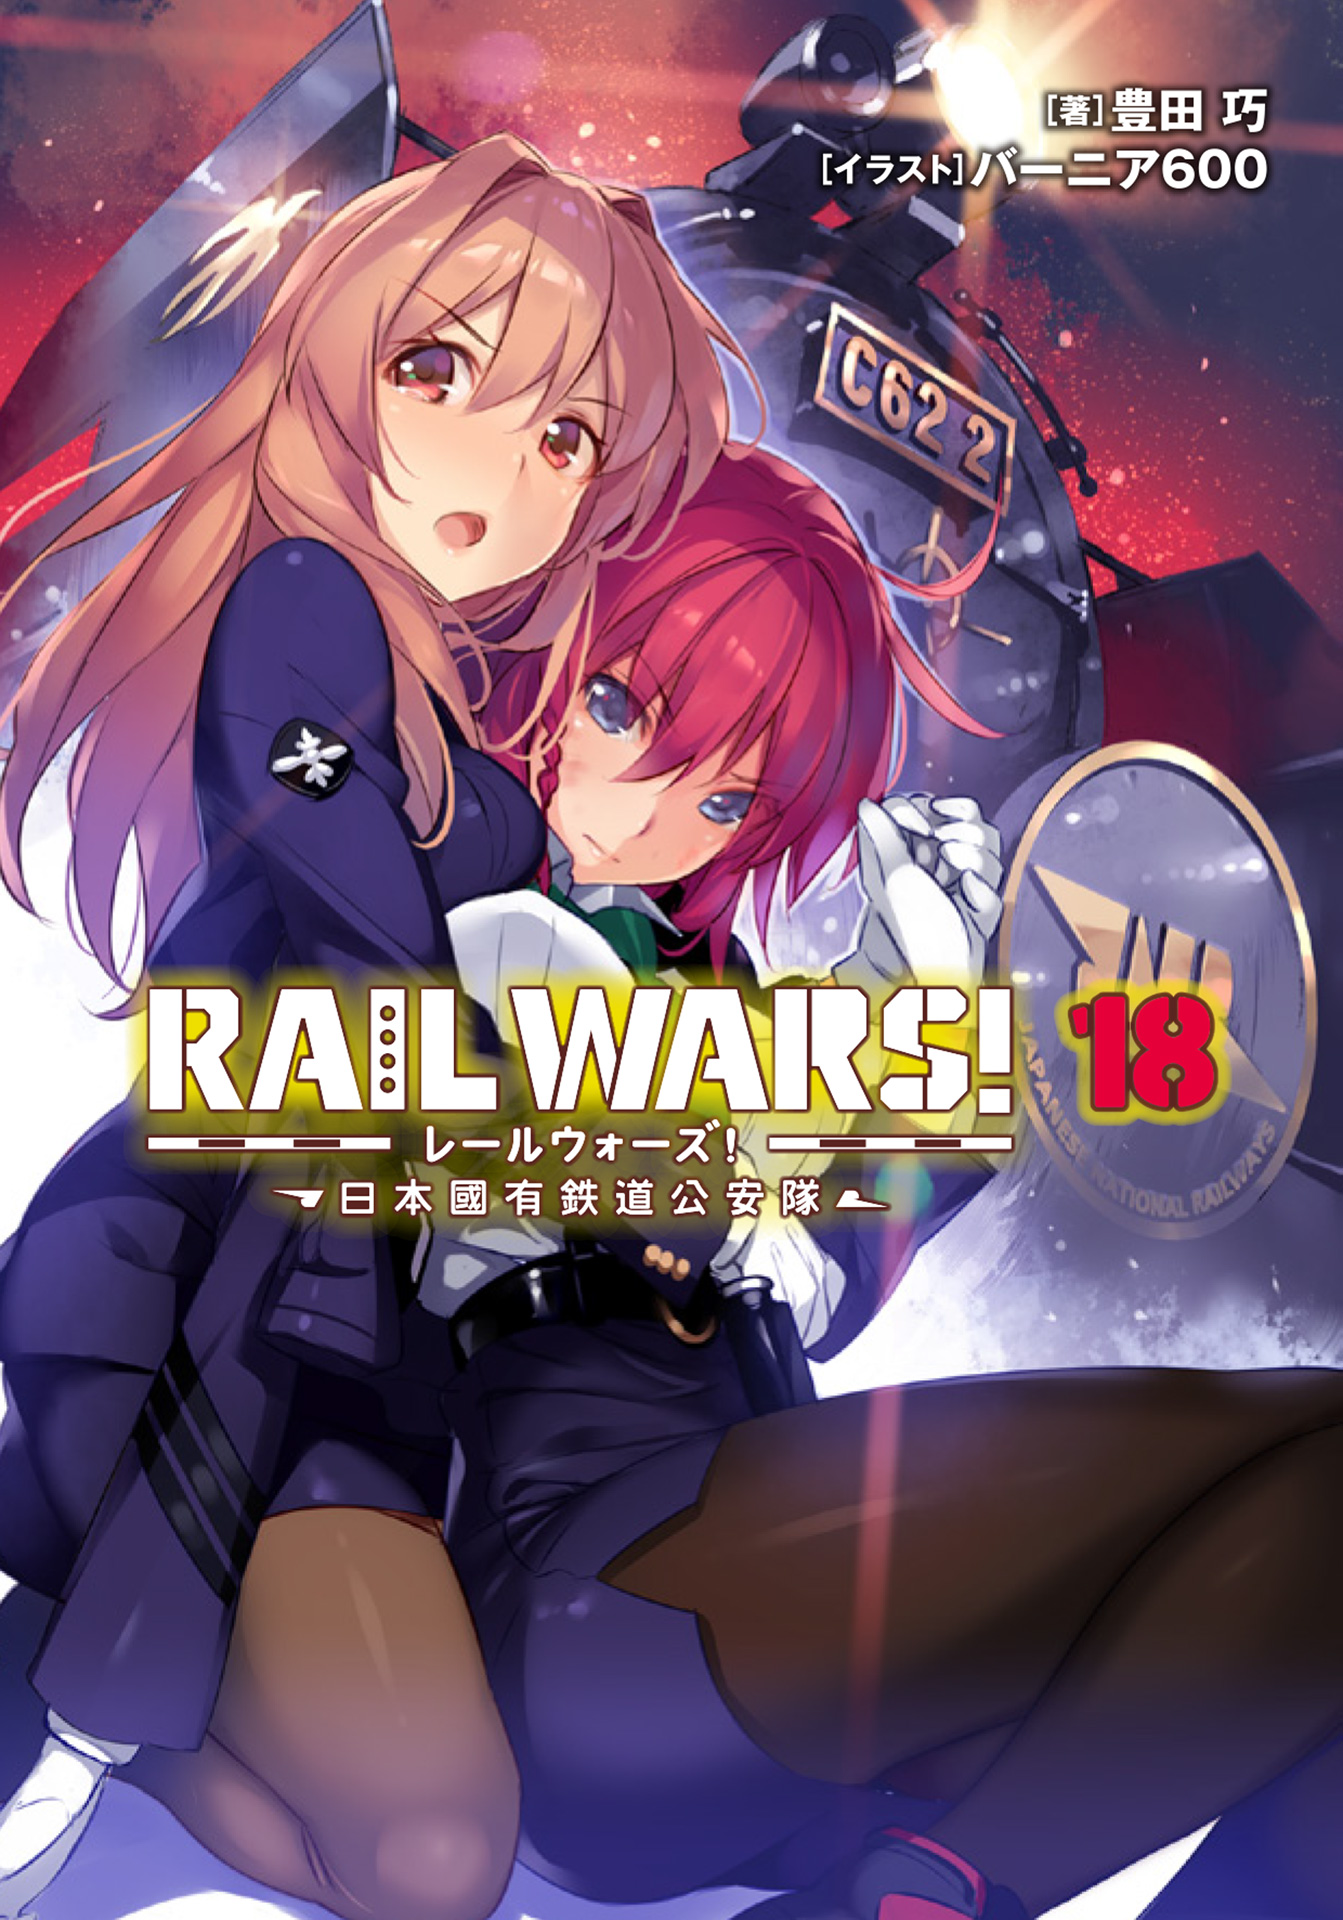 Rail Wars! Wallpapers